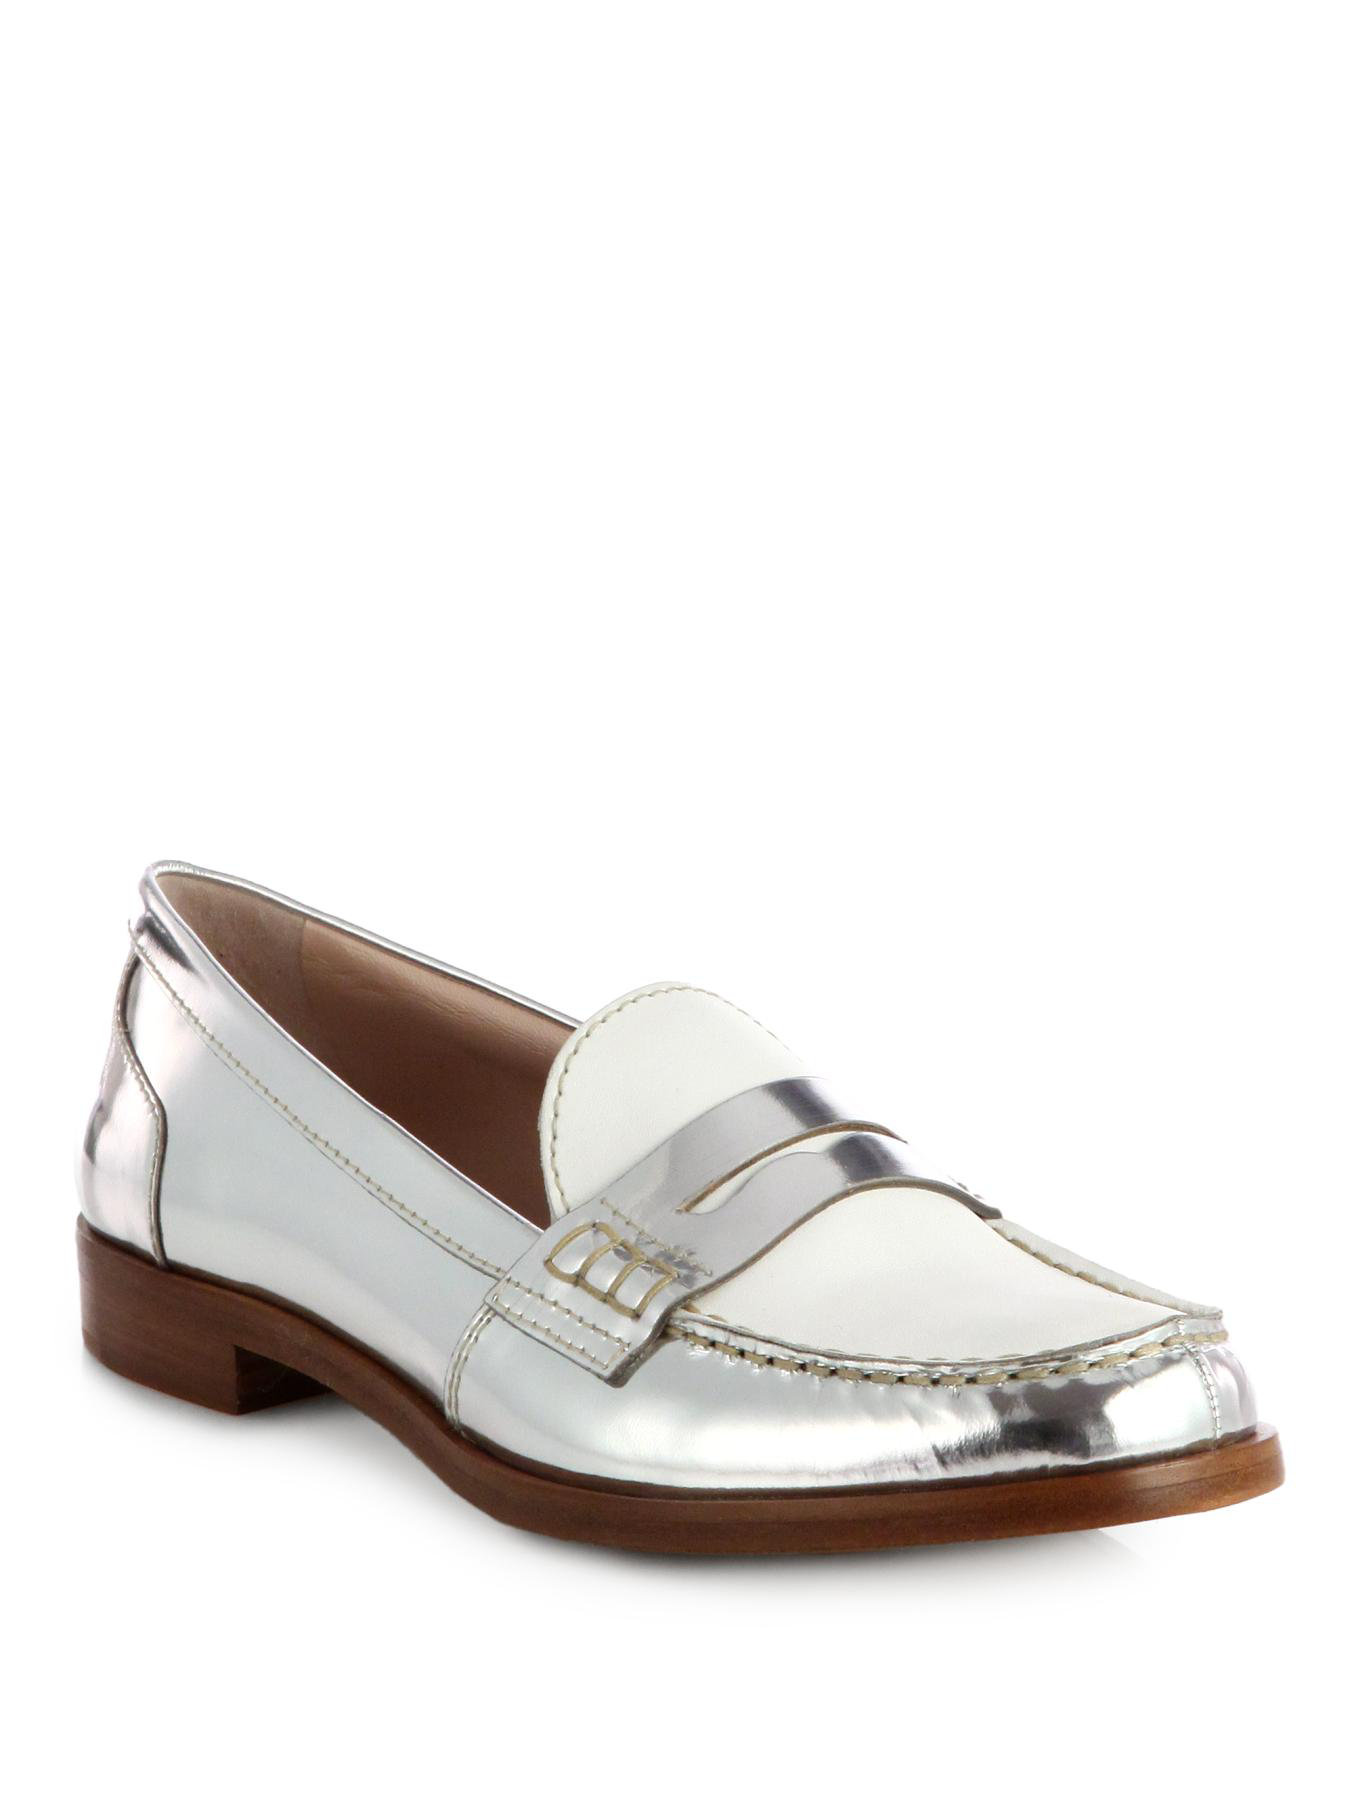 Miu Miu Bicolor Metallic Leather Loafers in Silver (SILVER WHITE) | Lyst